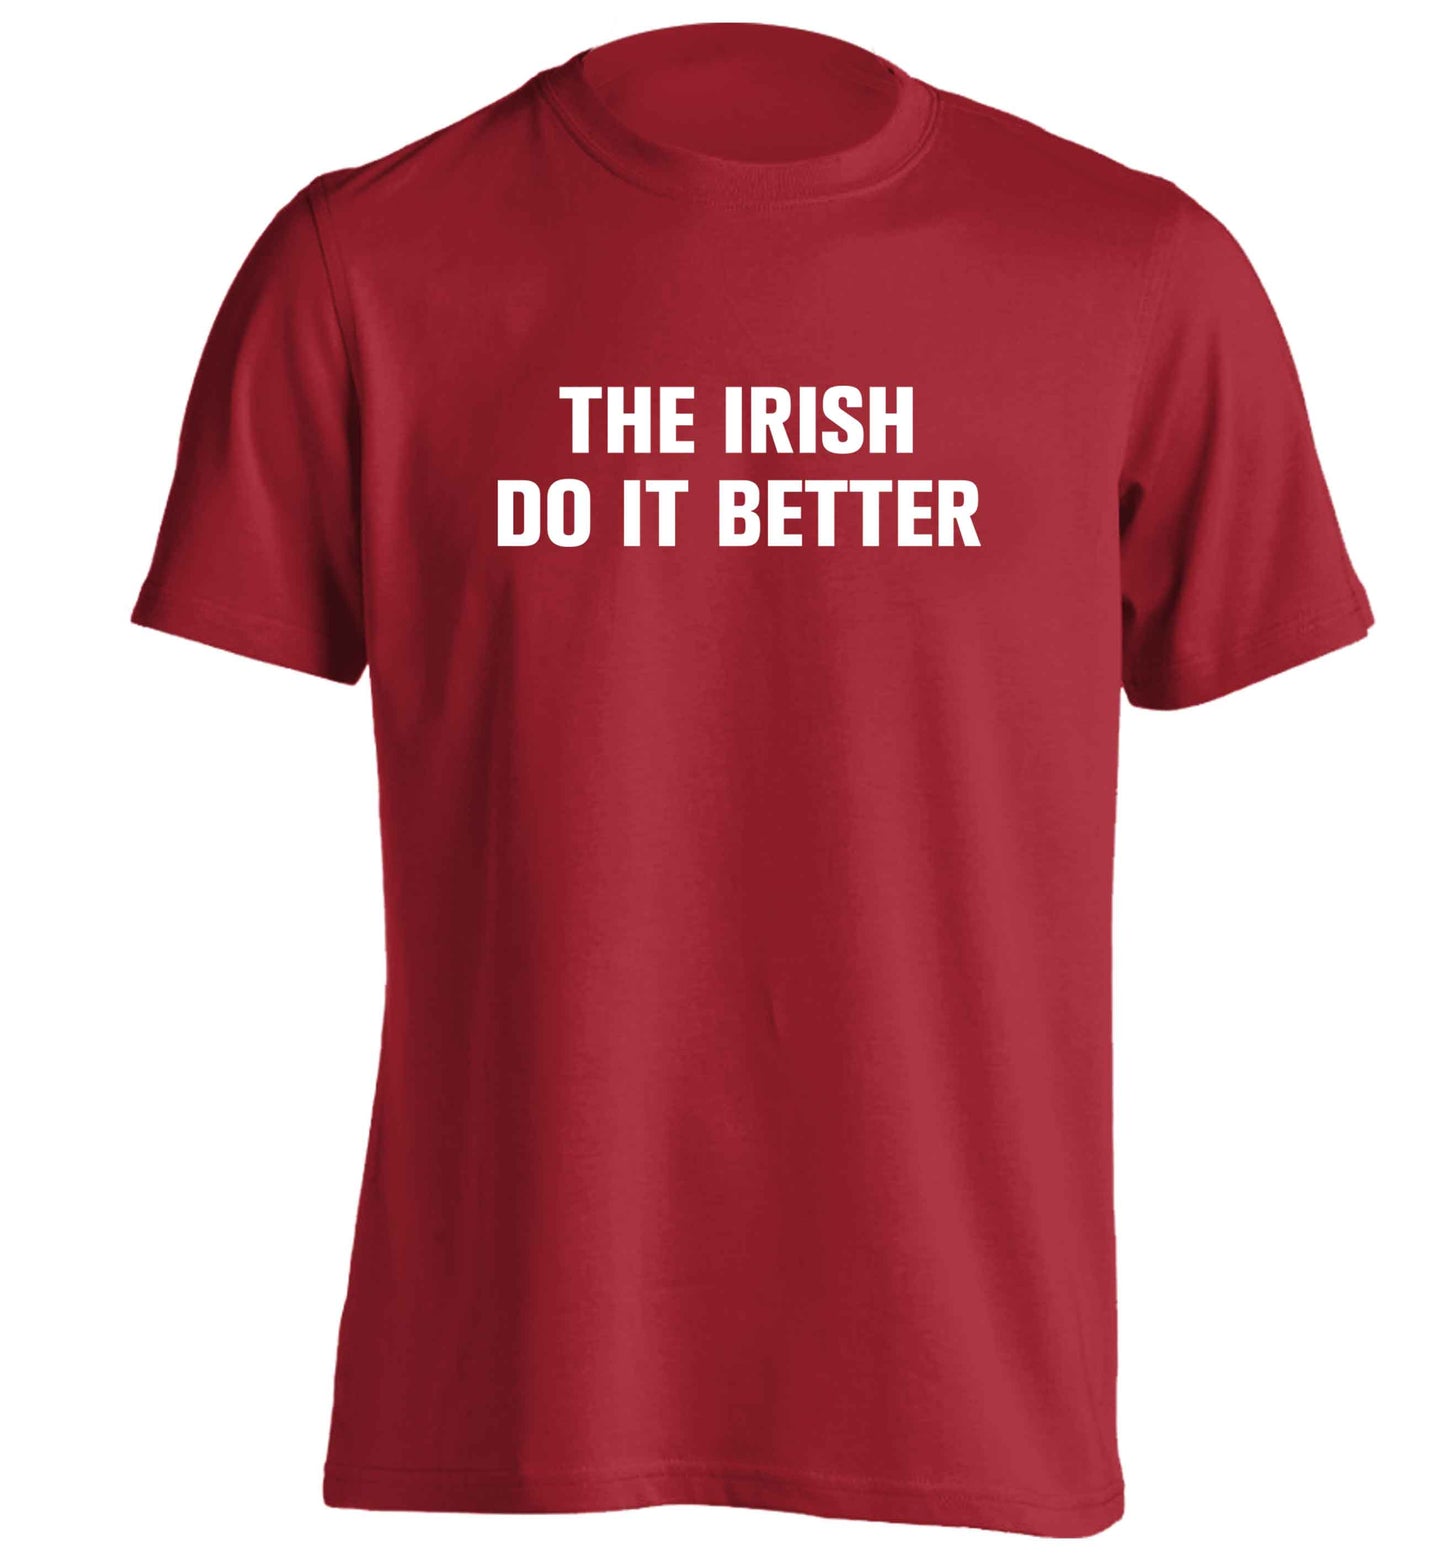 The Irish do it better adults unisex red Tshirt 2XL